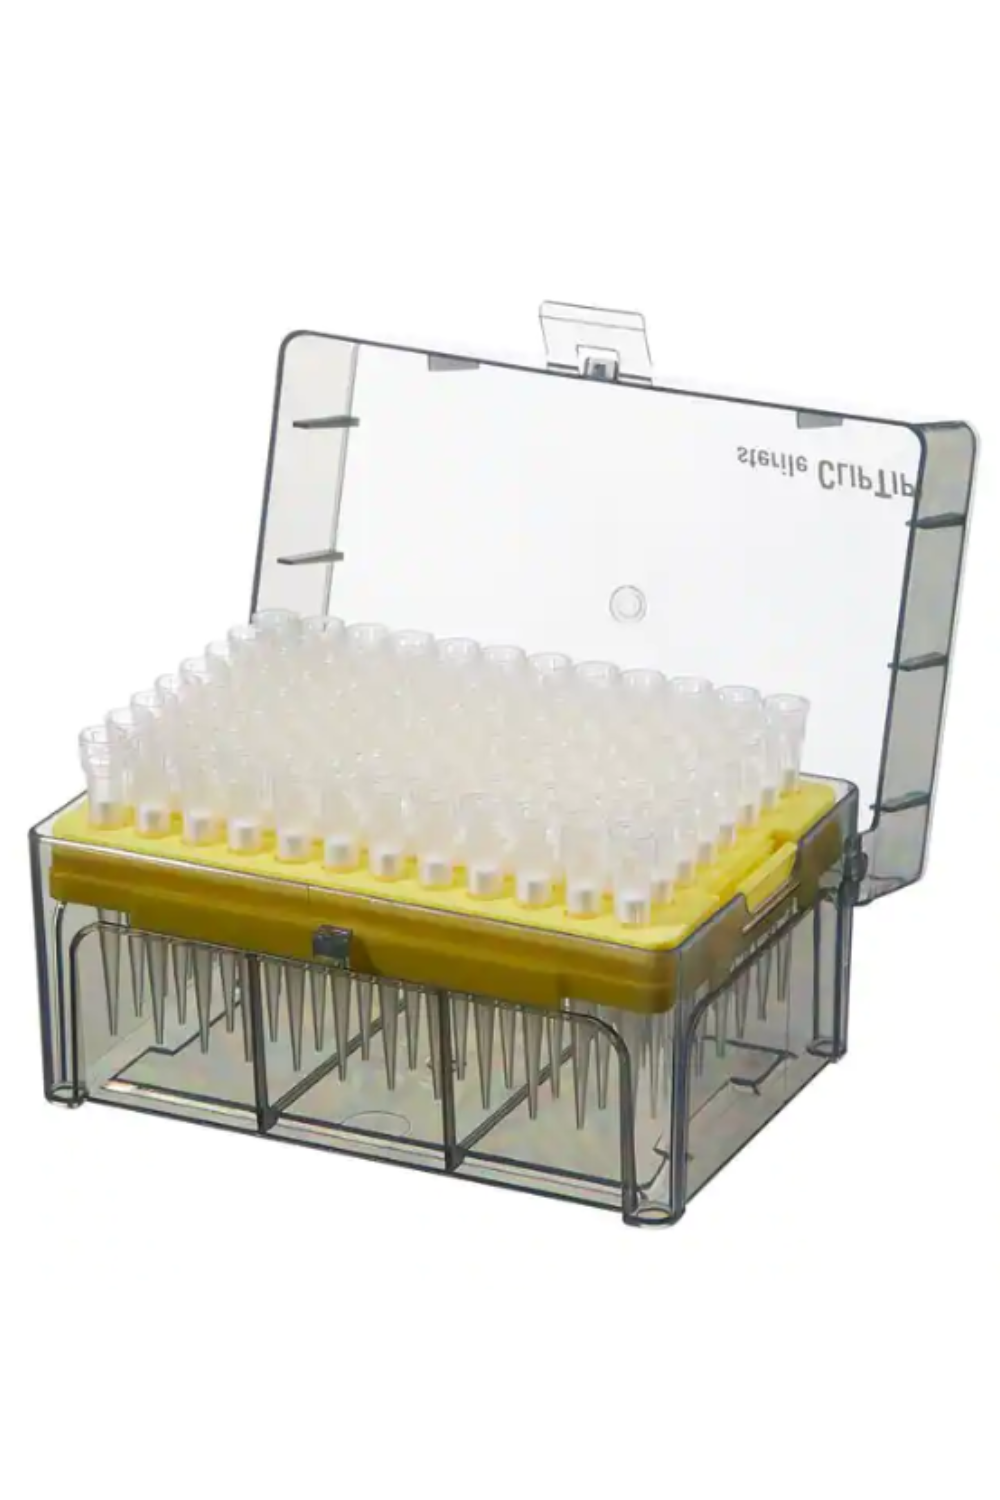 ClipTip 200, Filter, Sterile, Rack - Overpack of 5 racks of 960 tips (94420313)